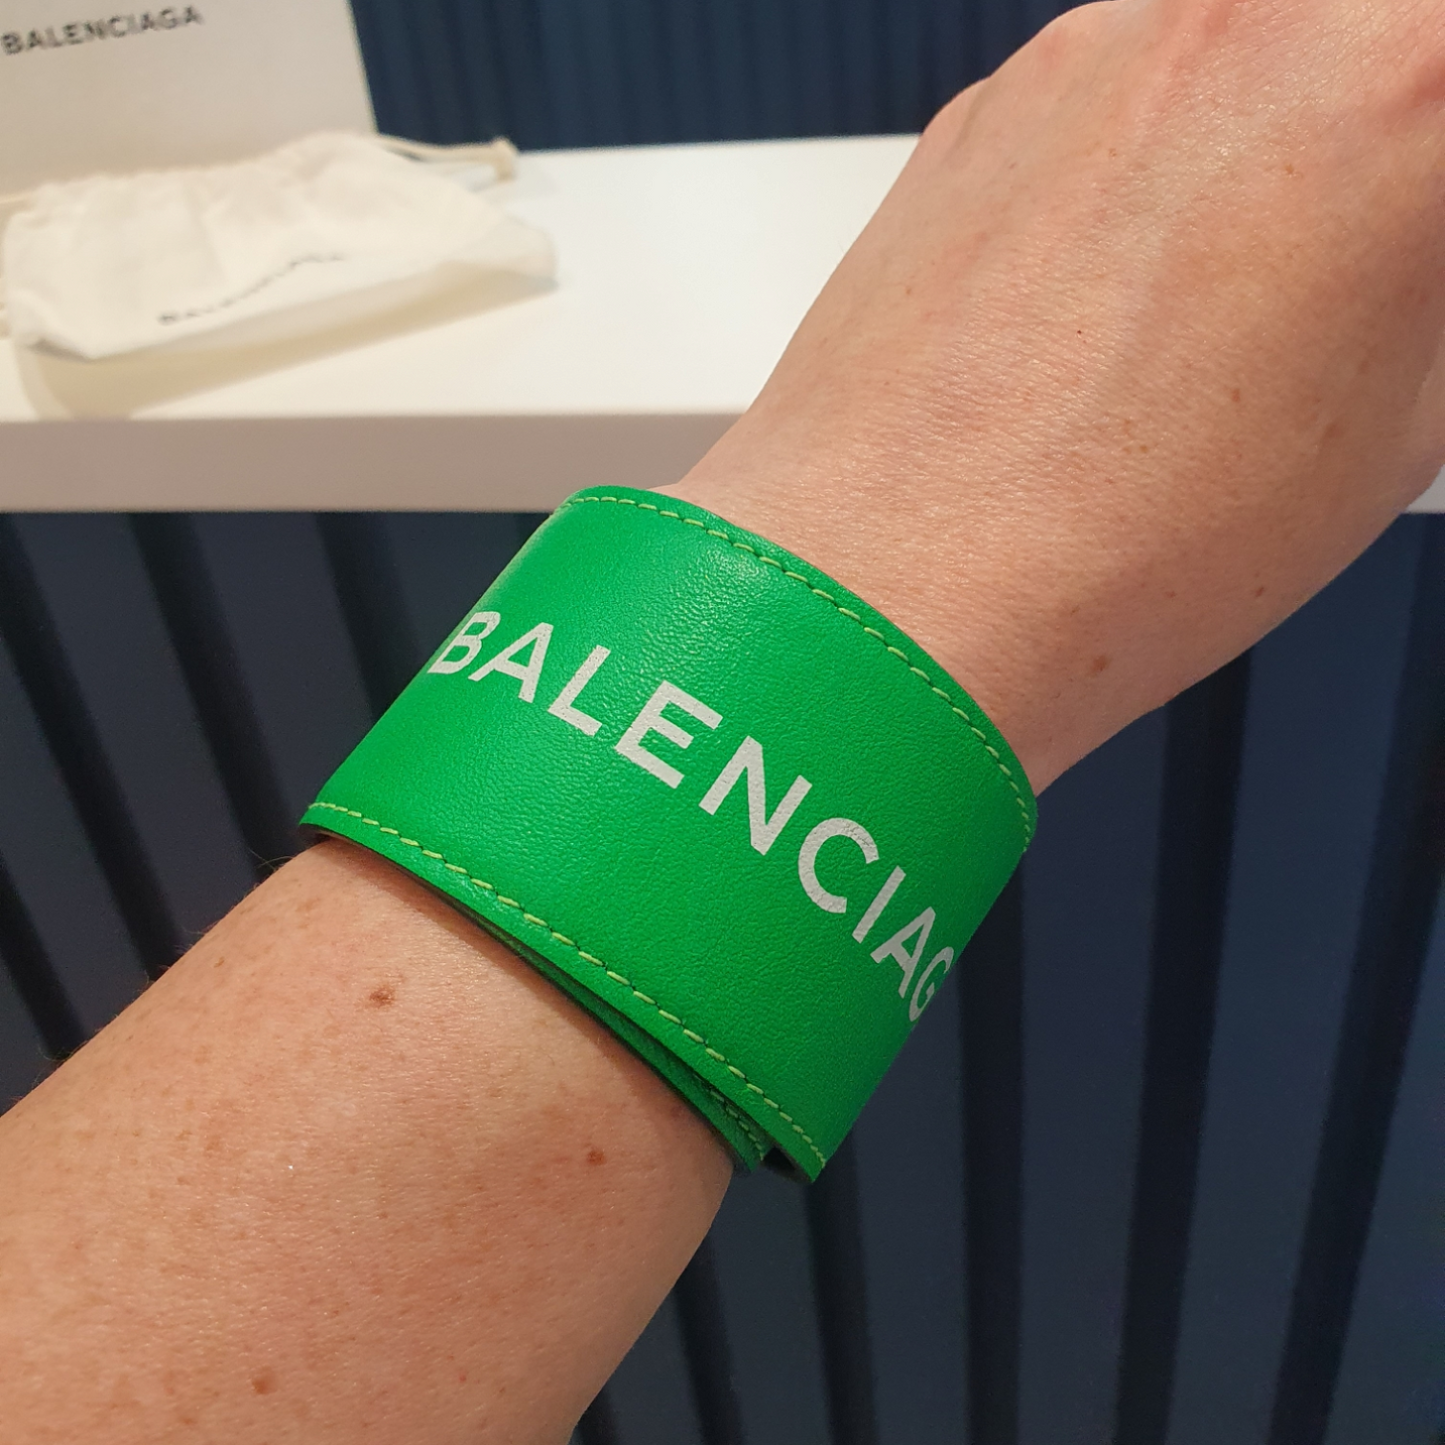 Balenciaga leather logo cuff, green